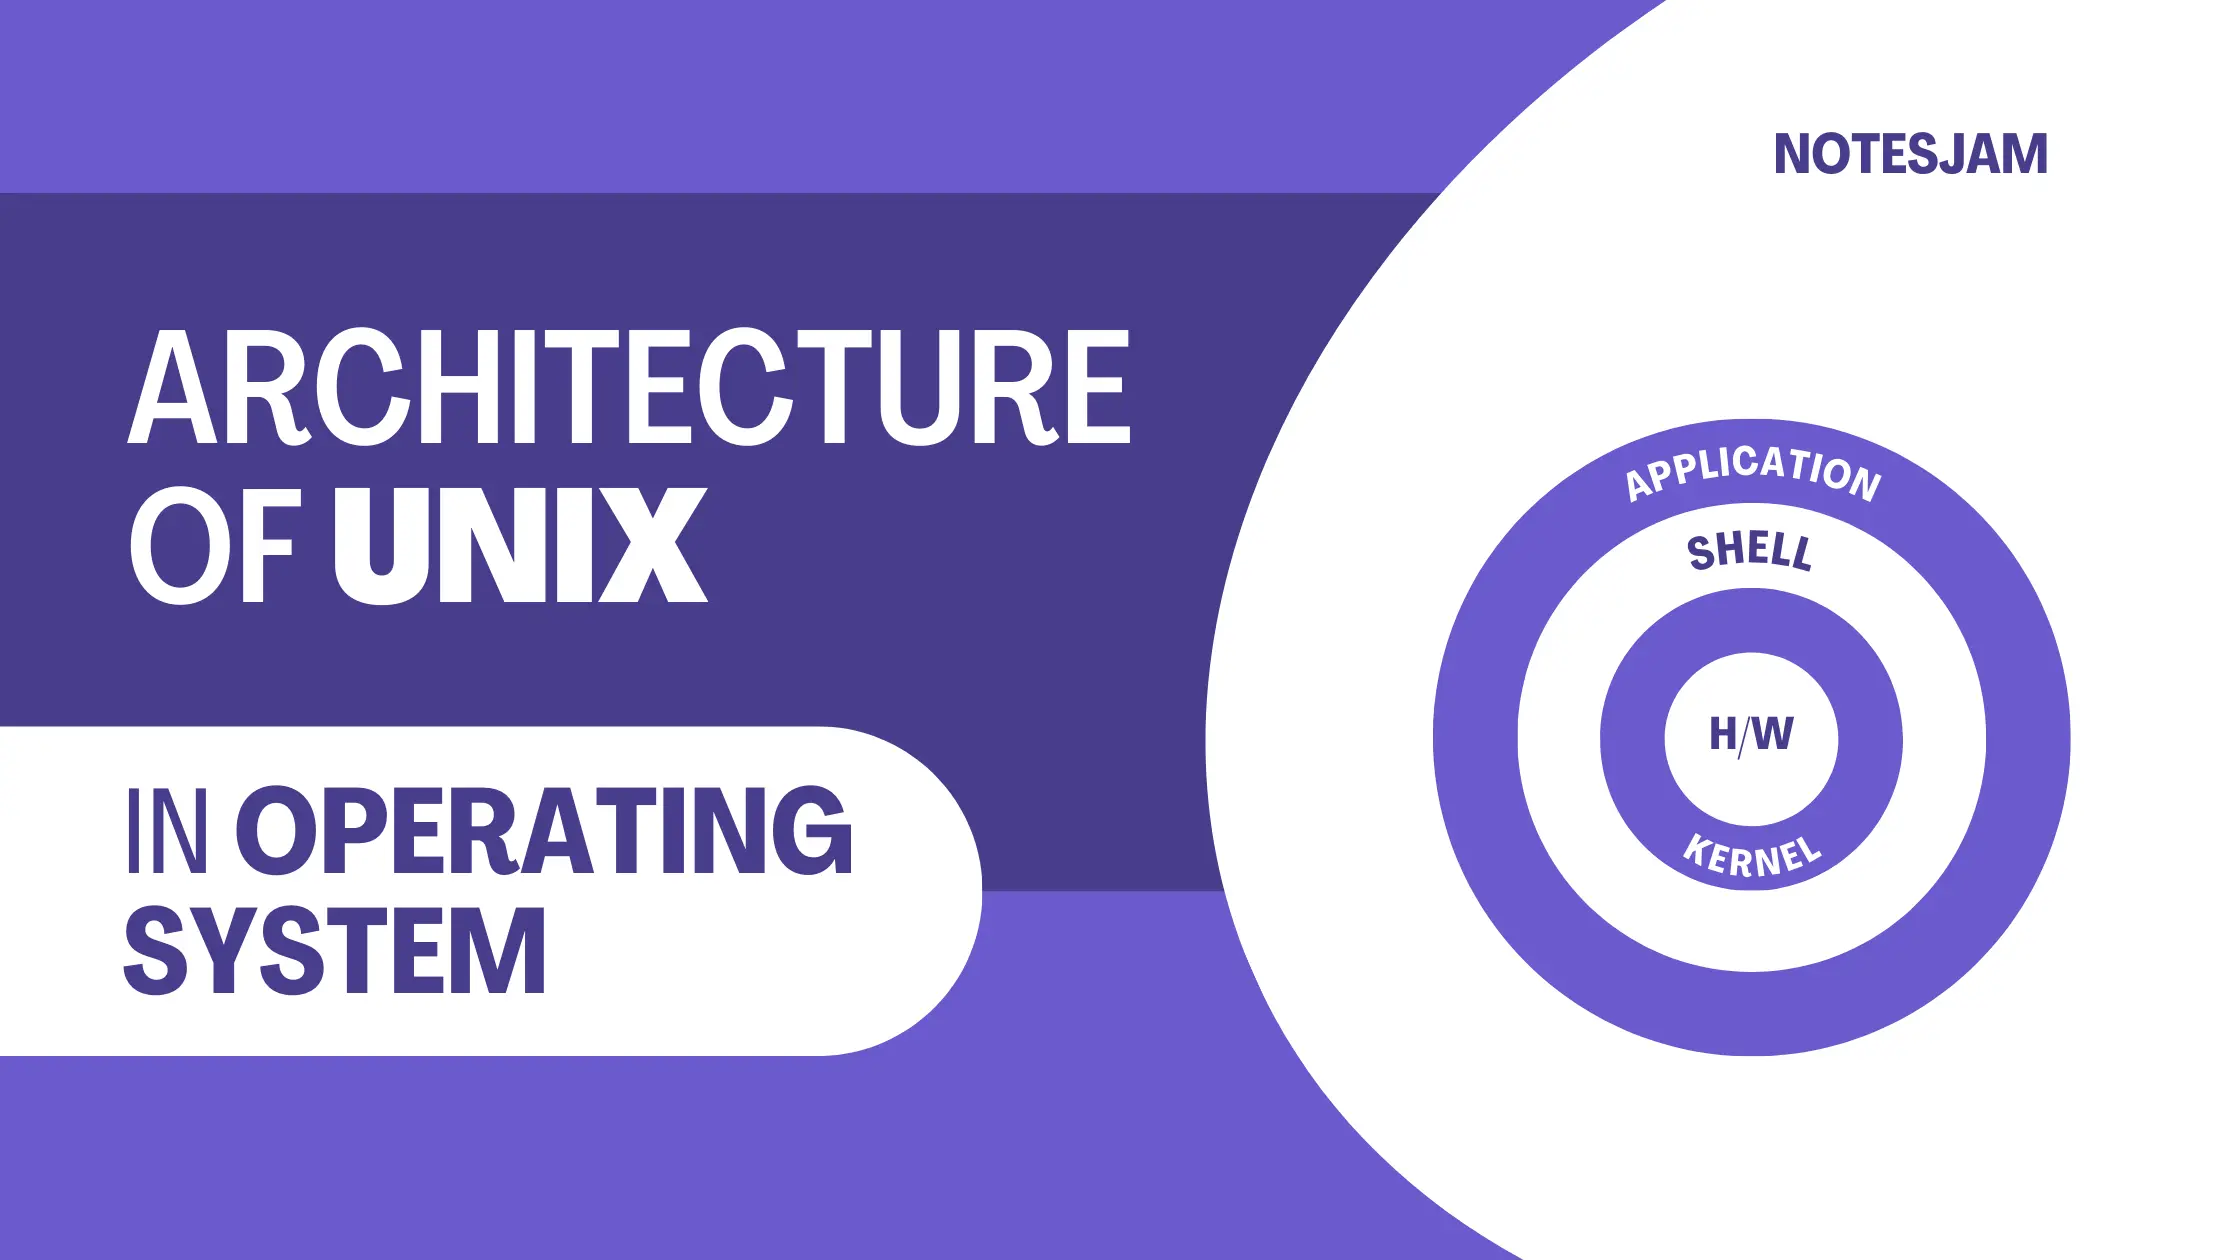 Architecture of Unix